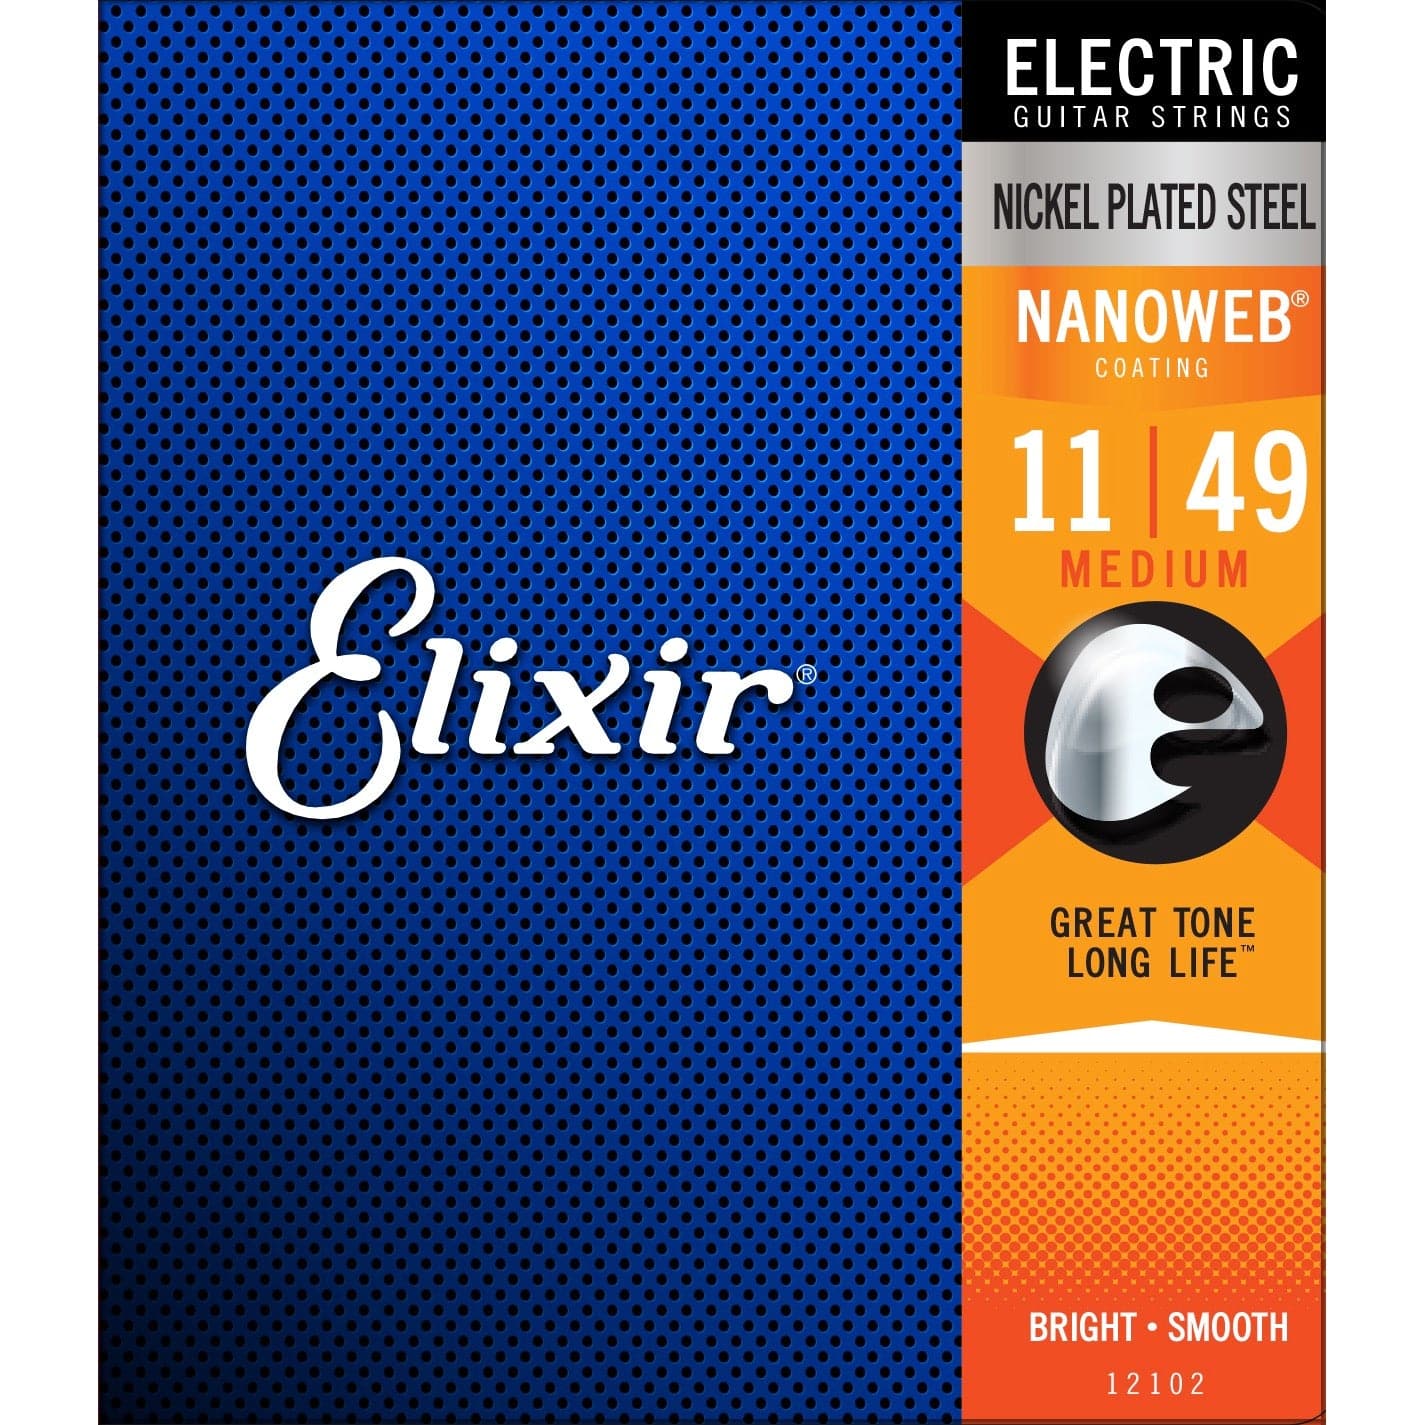 Elixir 12102 Nanoweb Coated Electric Guitar Strings - Medium - 11-49